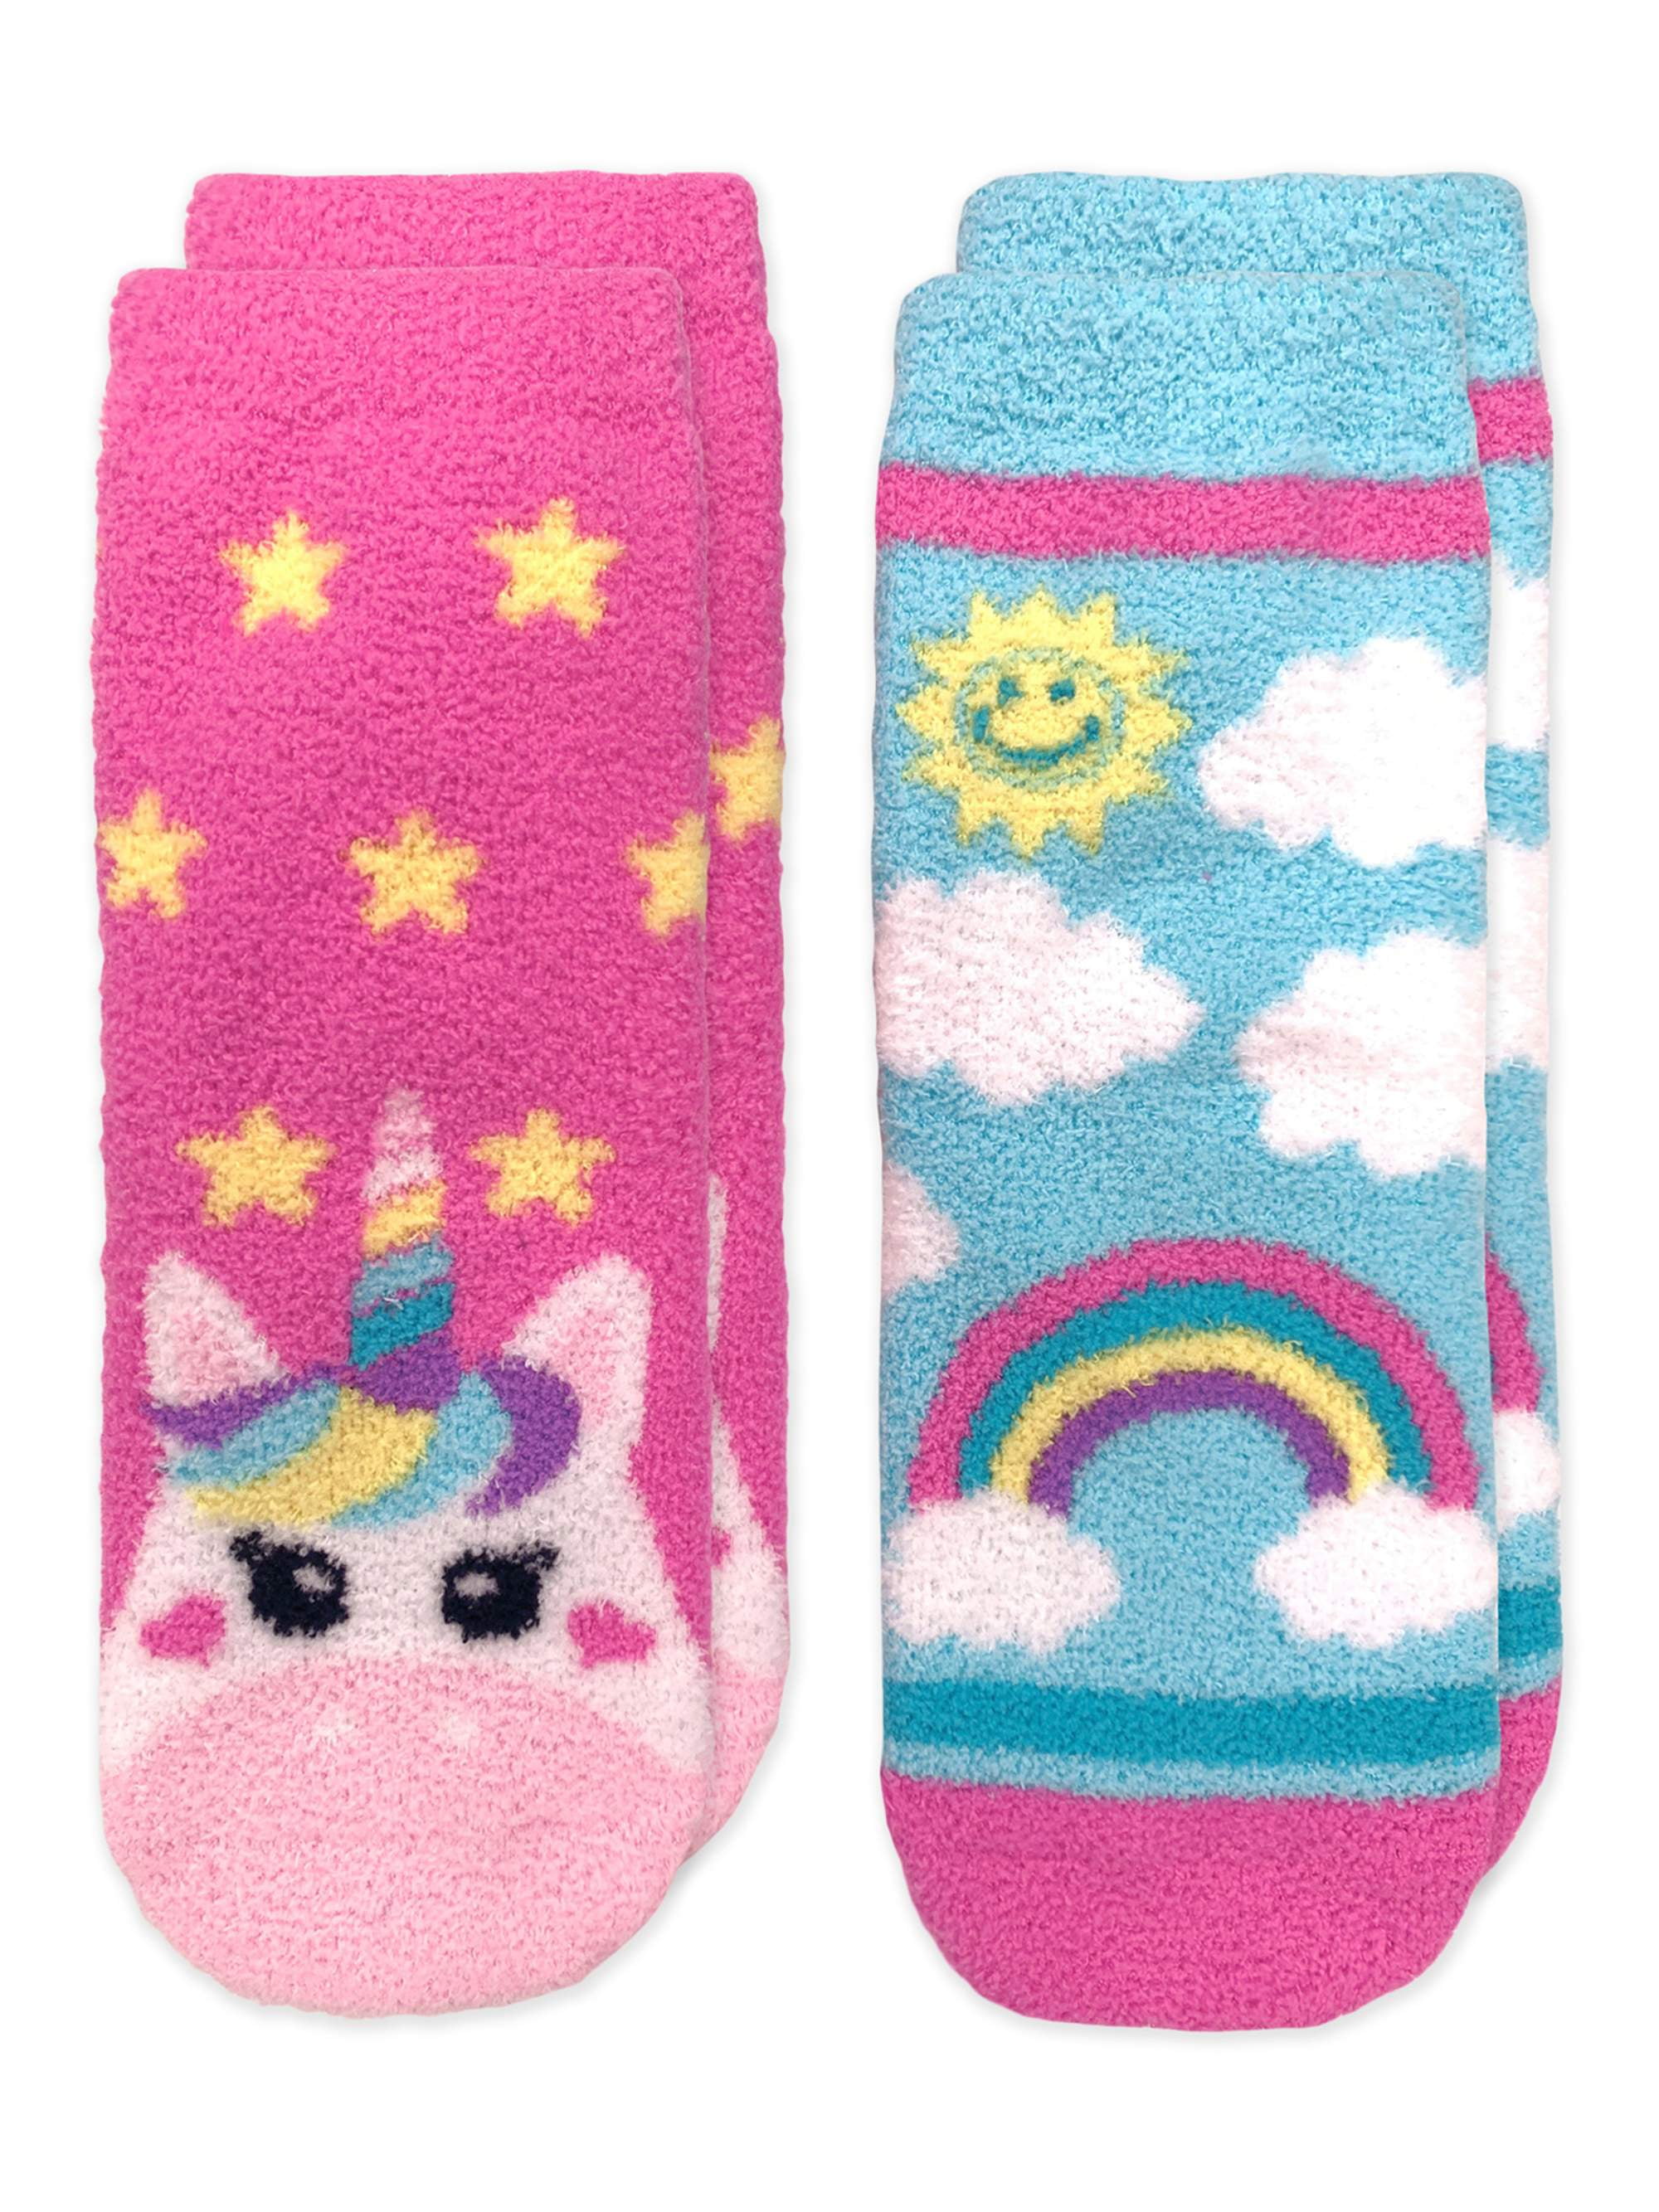 NWT Womens Unicorn Rainbow Slipper Socks M/LG 8-10 